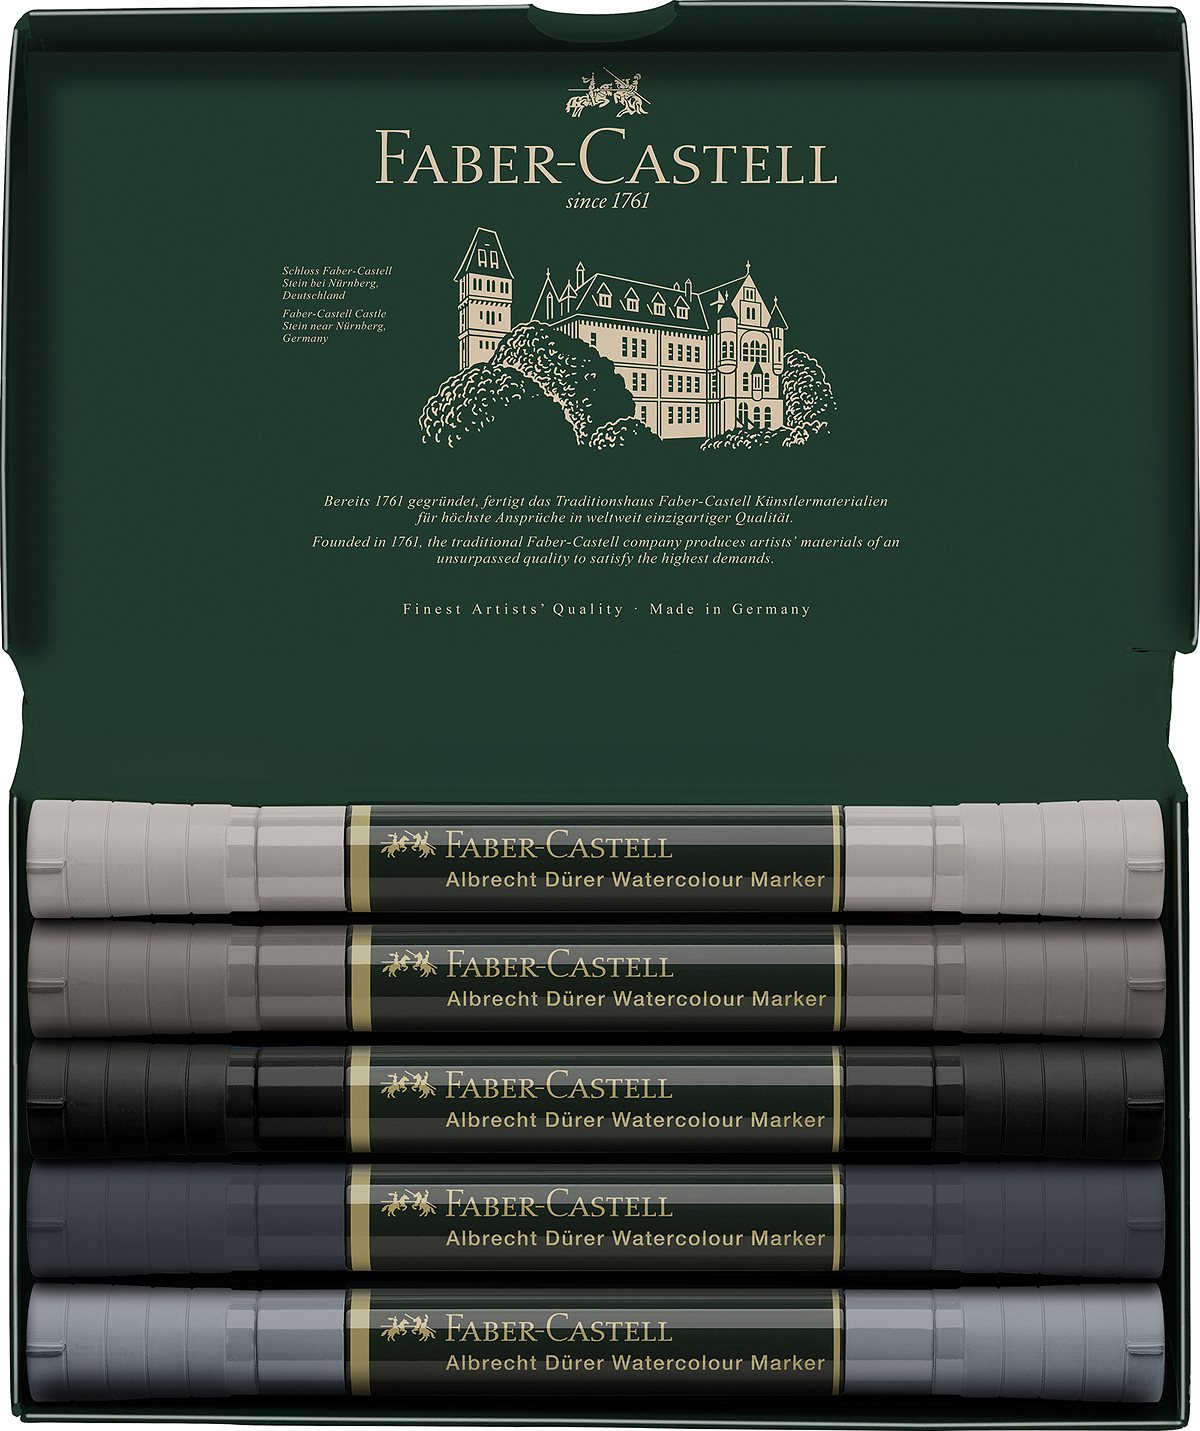 Faber-Castell_Albrecht Dürer Watercolour Marker Grey Tones_5er Etui_20 EUR (2)